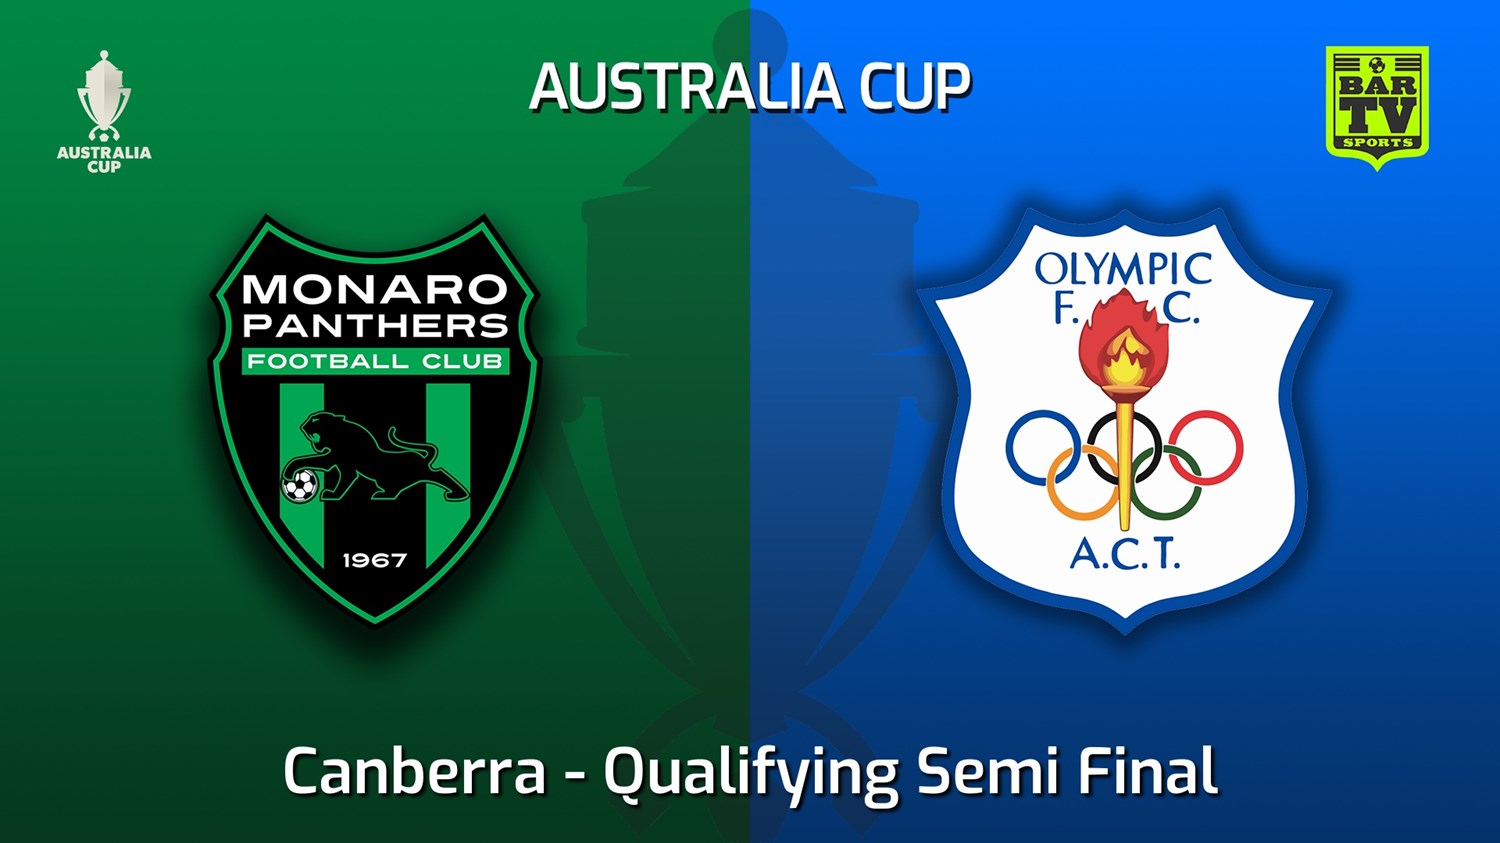 220517-Australia Cup Qualifying Canberra Qualifying Semi Final - Monaro Panthers v Canberra Olympic FC Minigame Slate Image